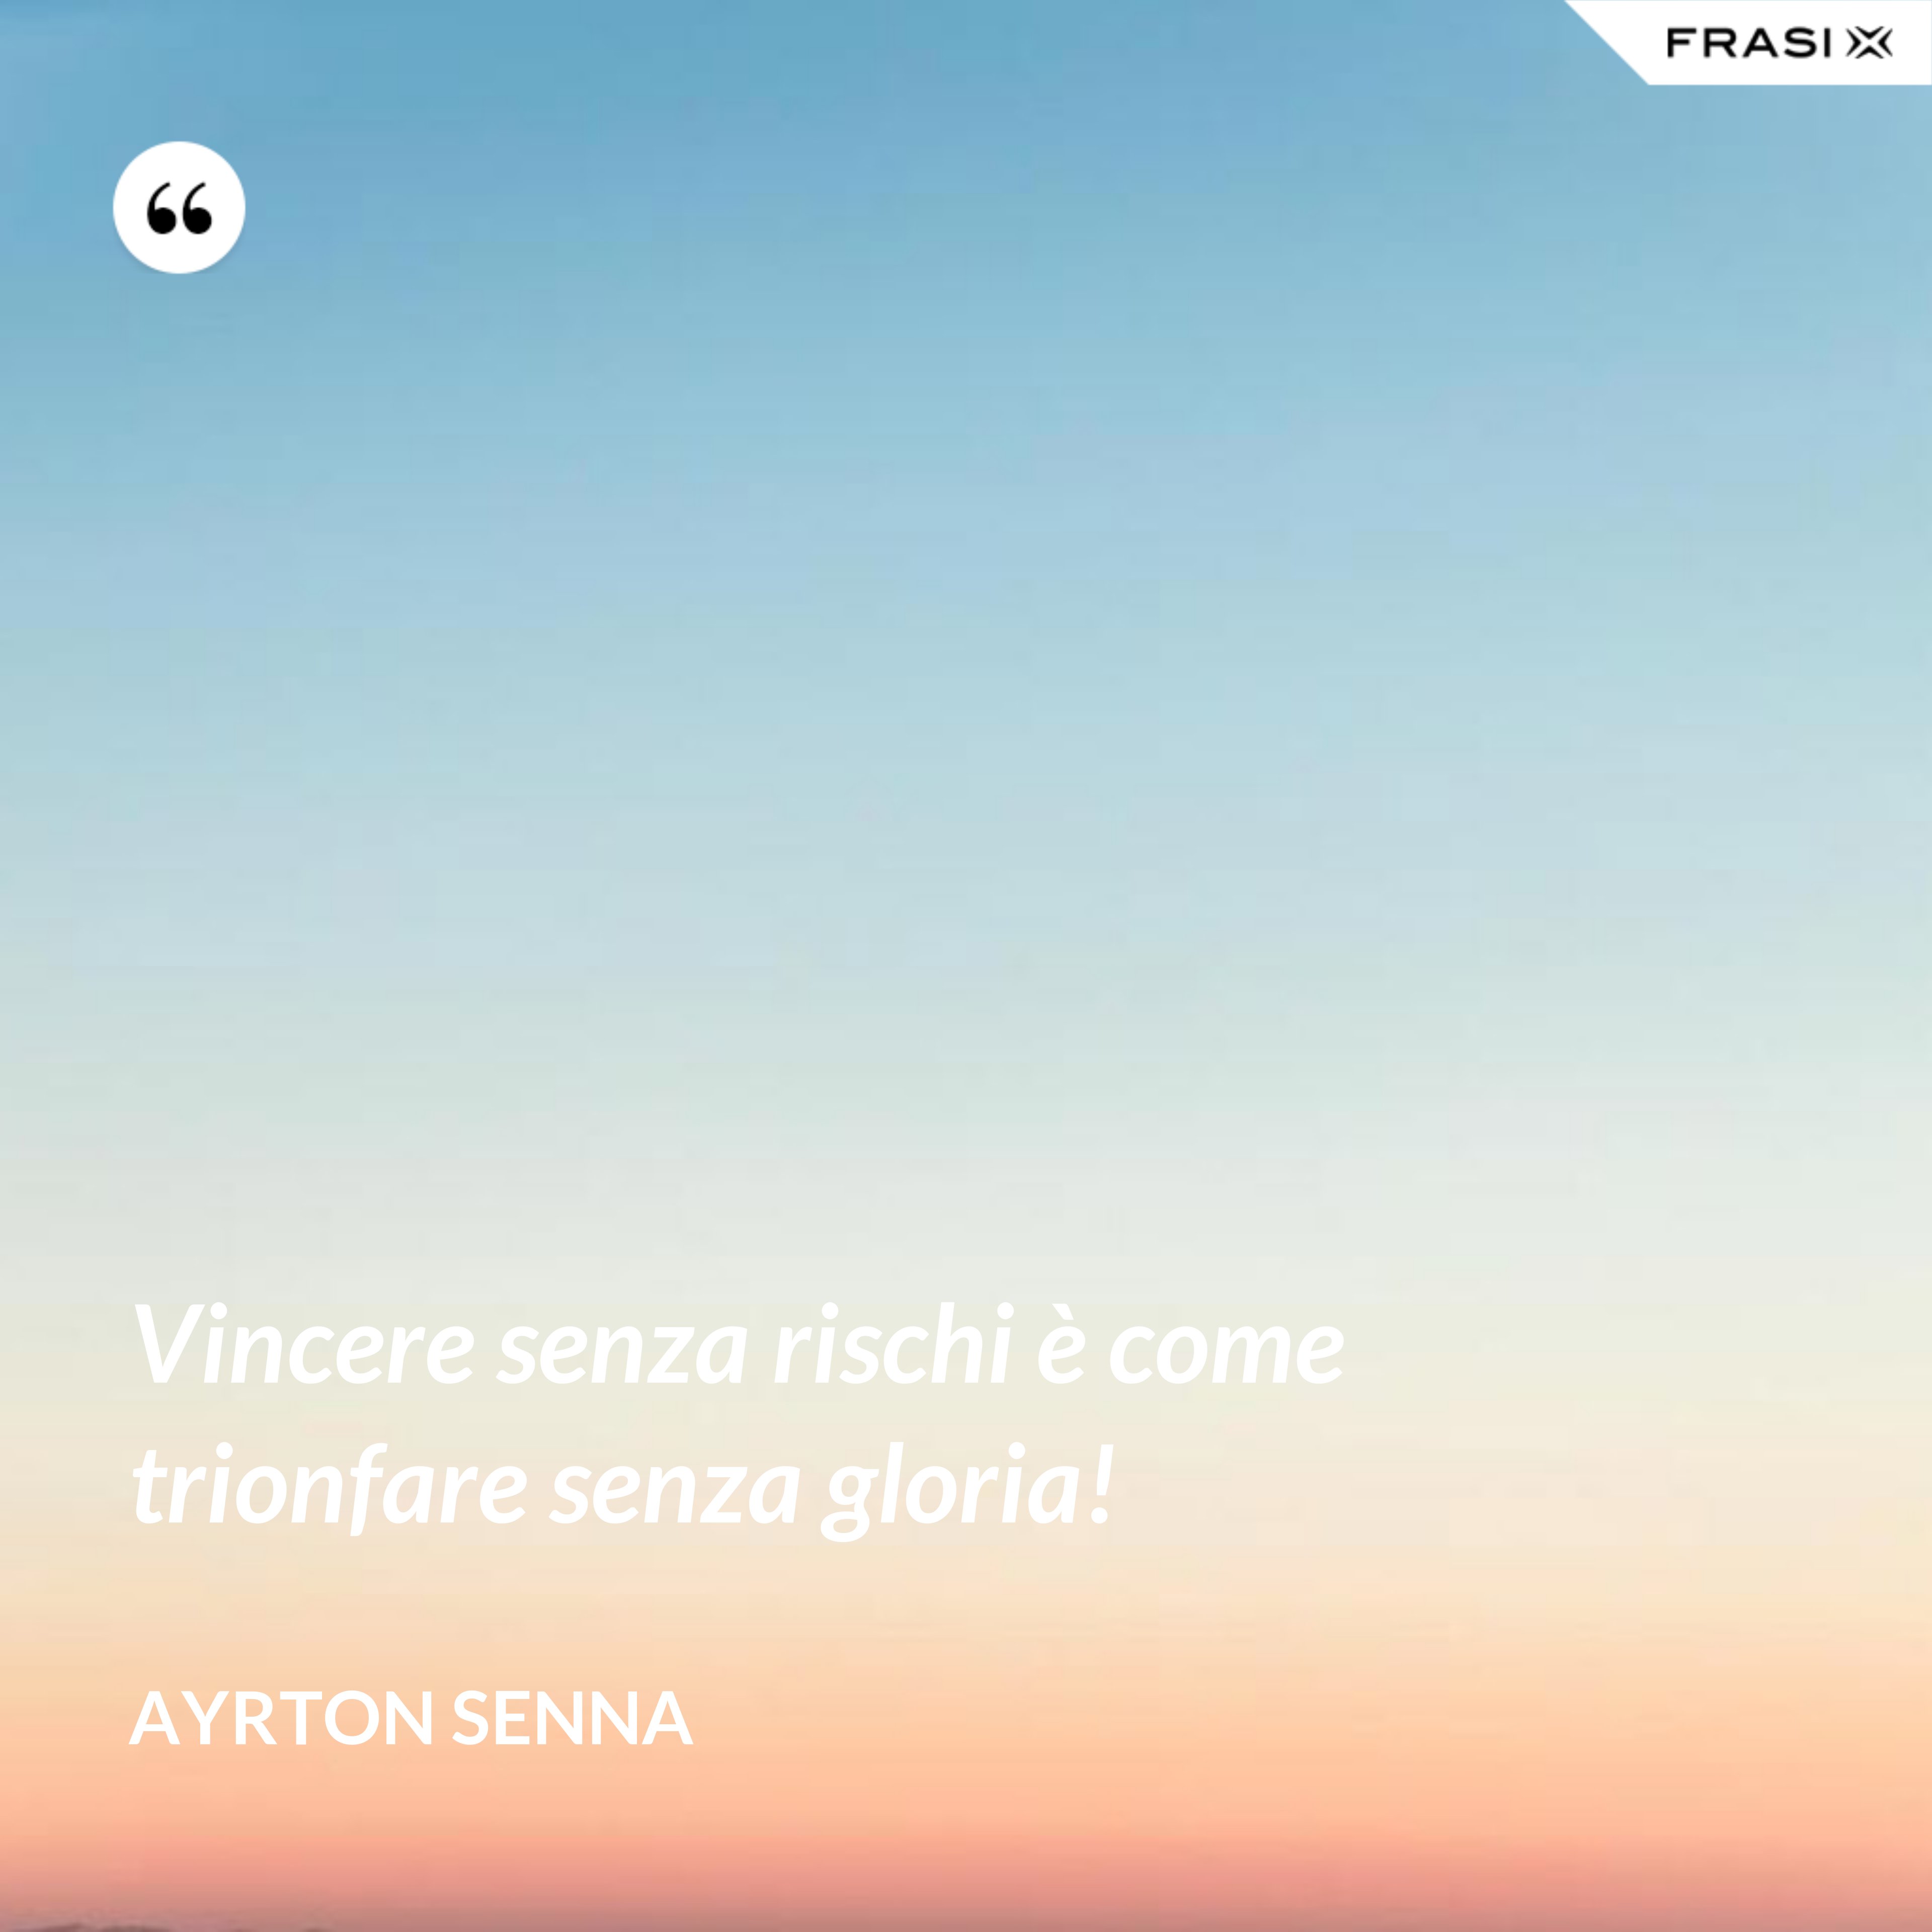 Vincere senza rischi è come trionfare senza gloria! - Ayrton Senna